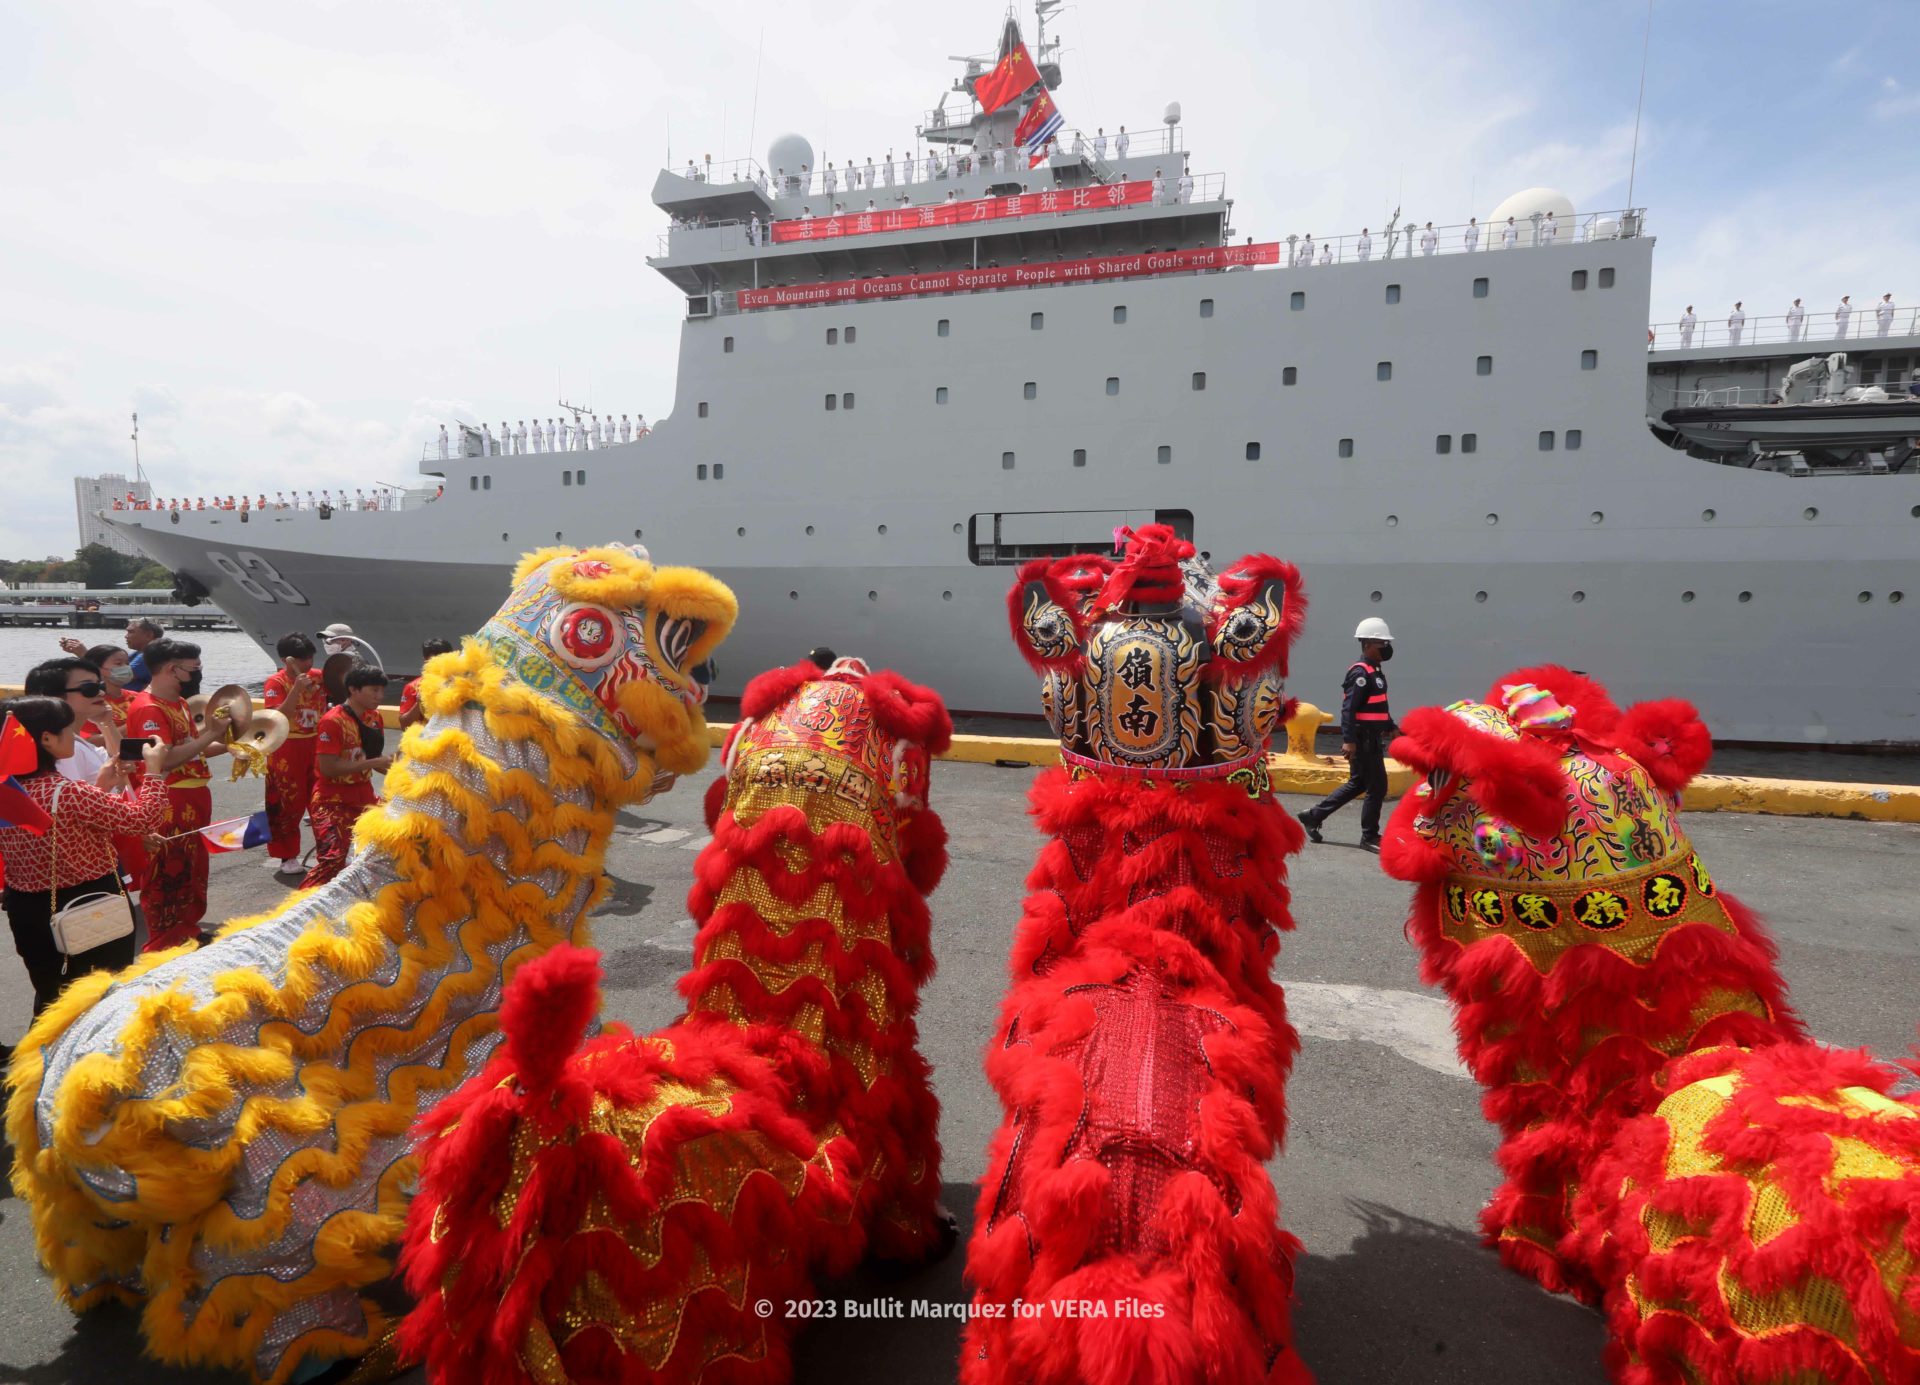 061423 Qi Jiguang Chinese Naval Training Ship 10/10 Photo by Bullit Marquez